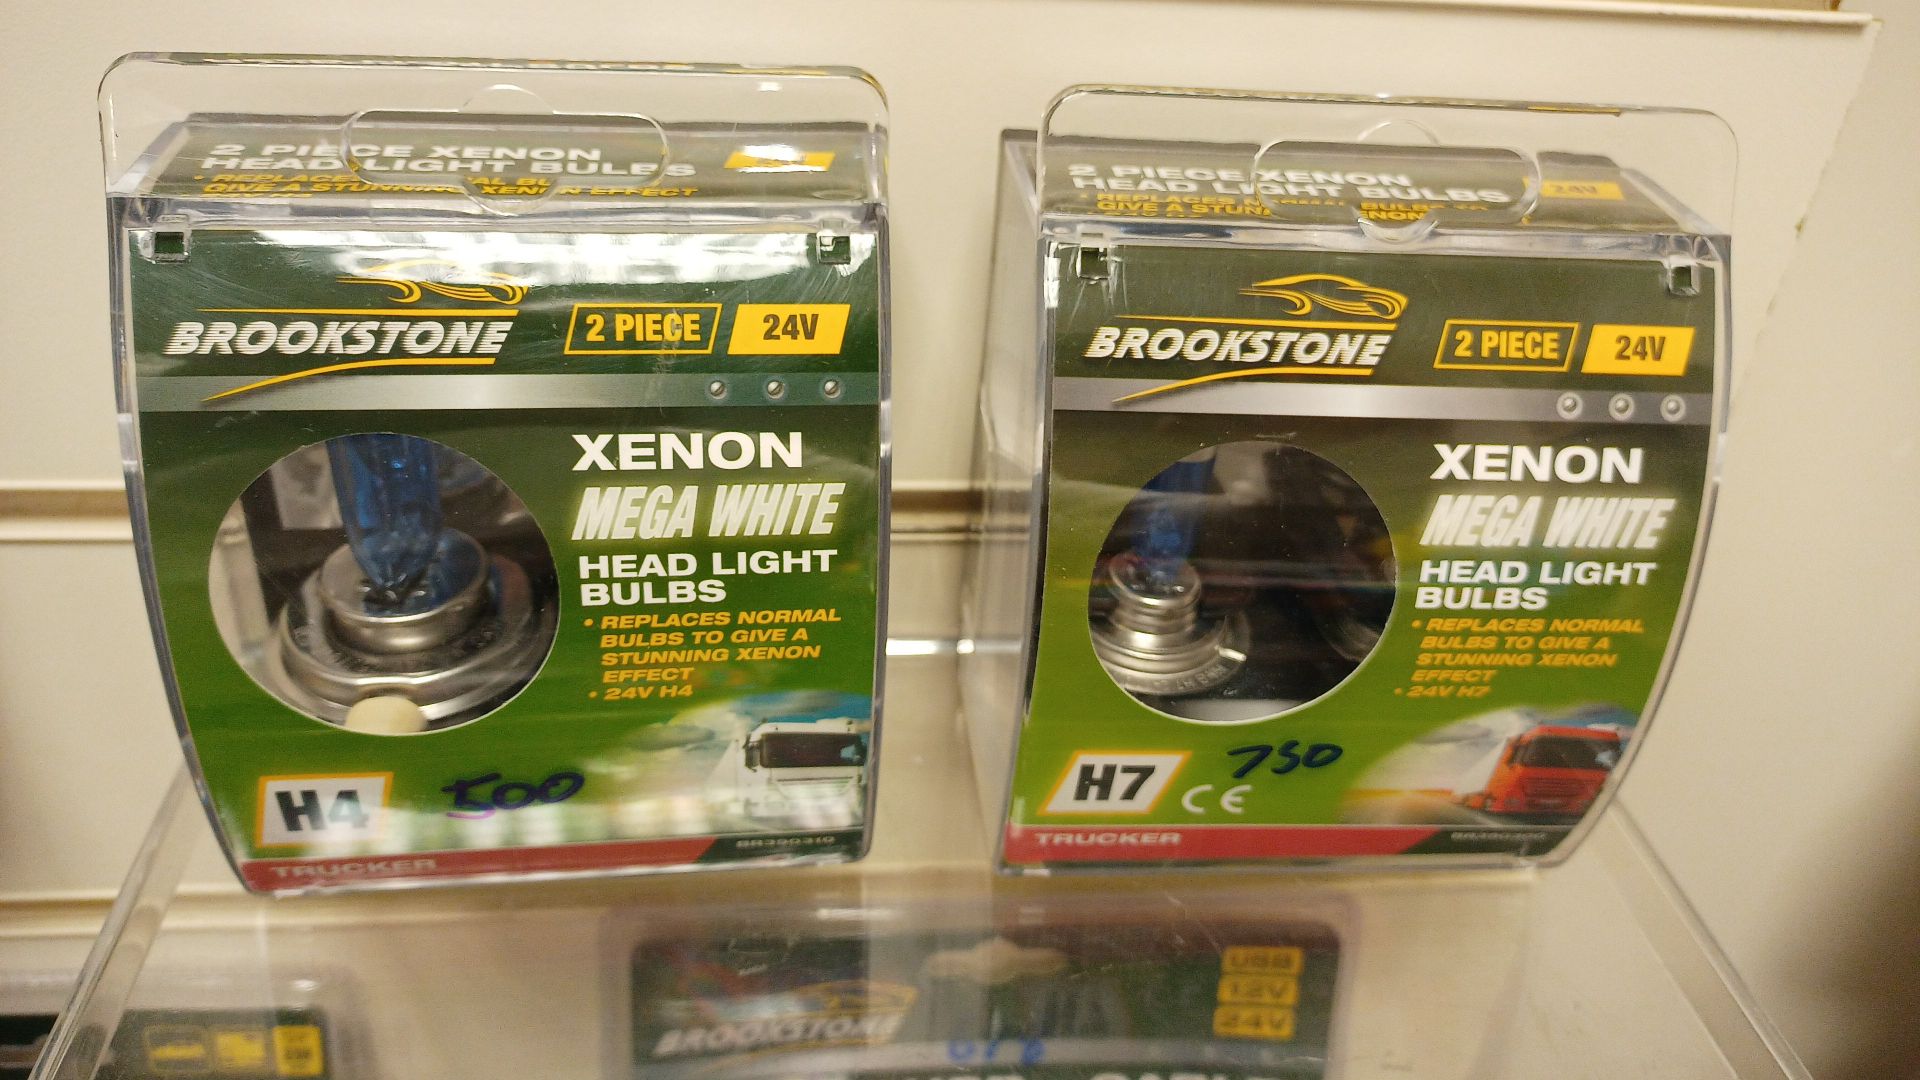 20 x Brookstone 2 Piece Zenon Headlight Bulbs | Total RRP £300